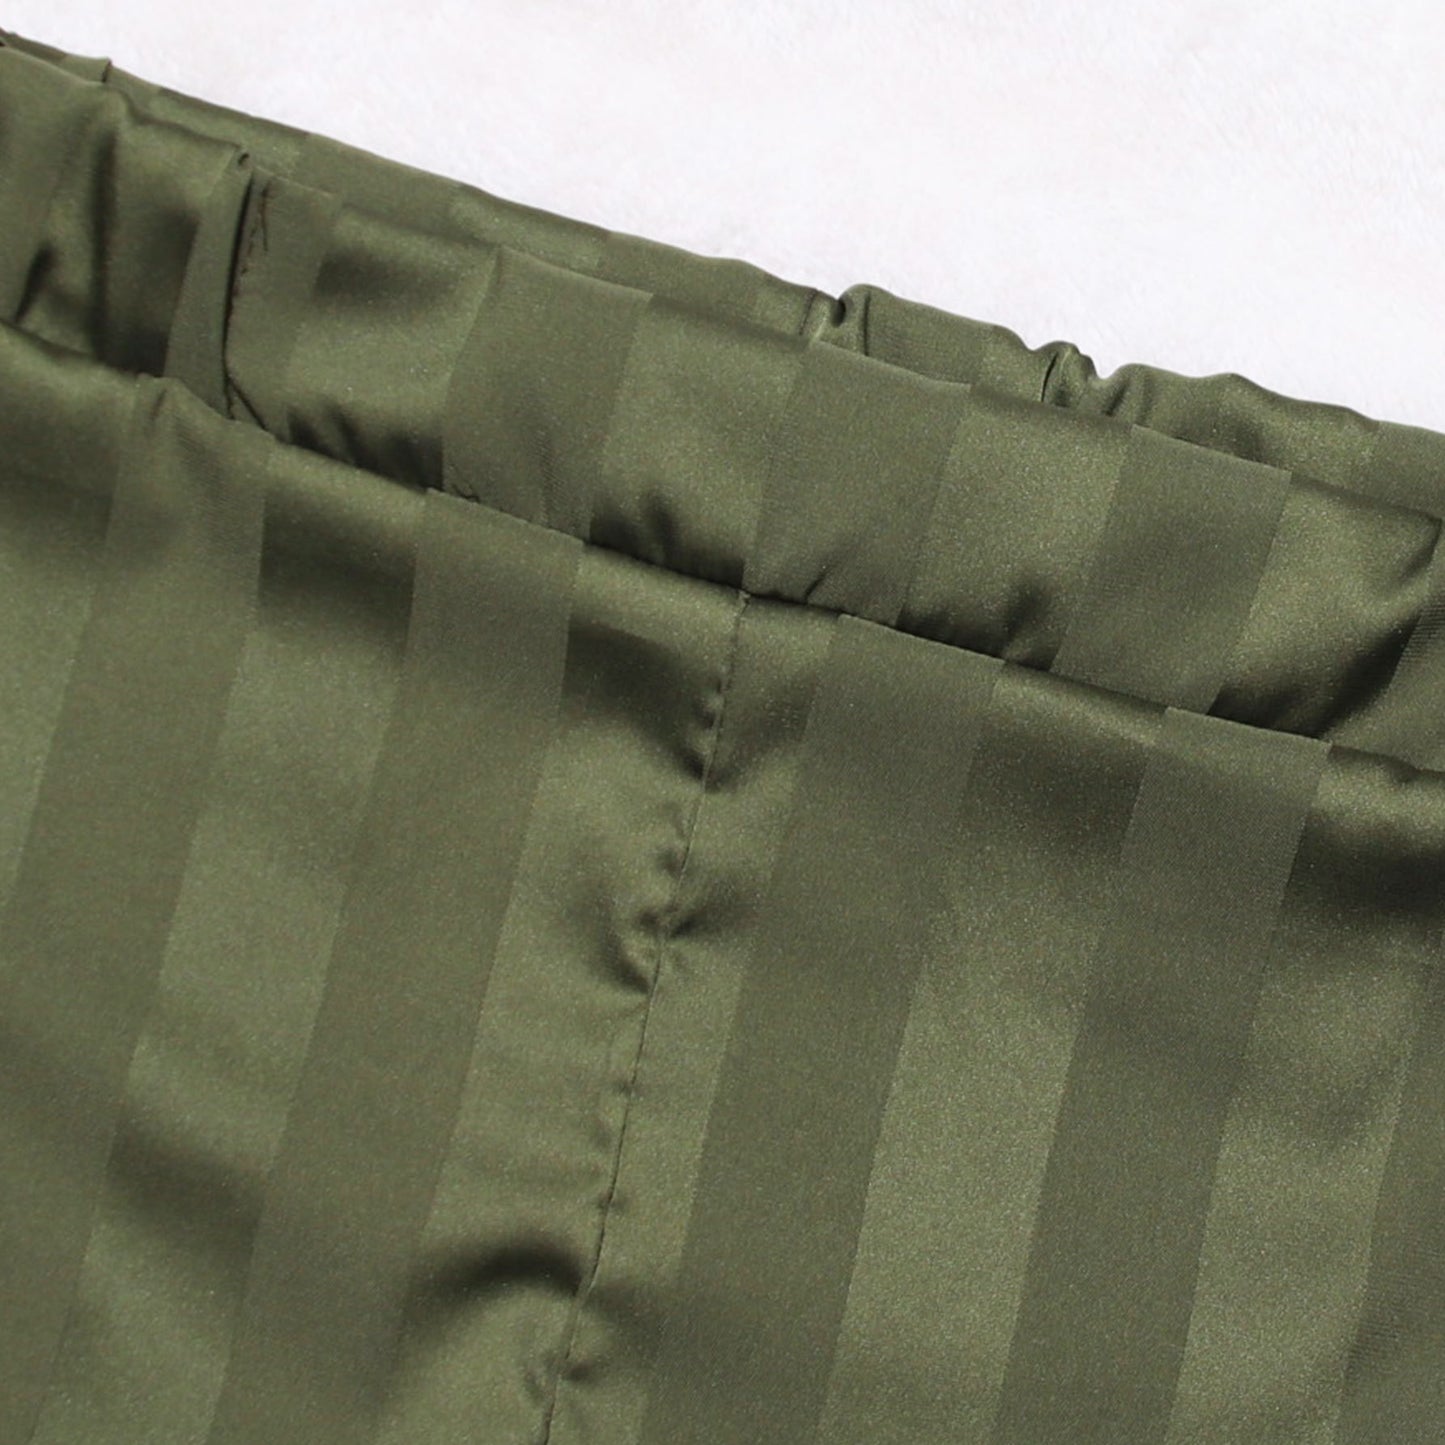 Cargo Pants | Green Satin Wide Leg Trousers